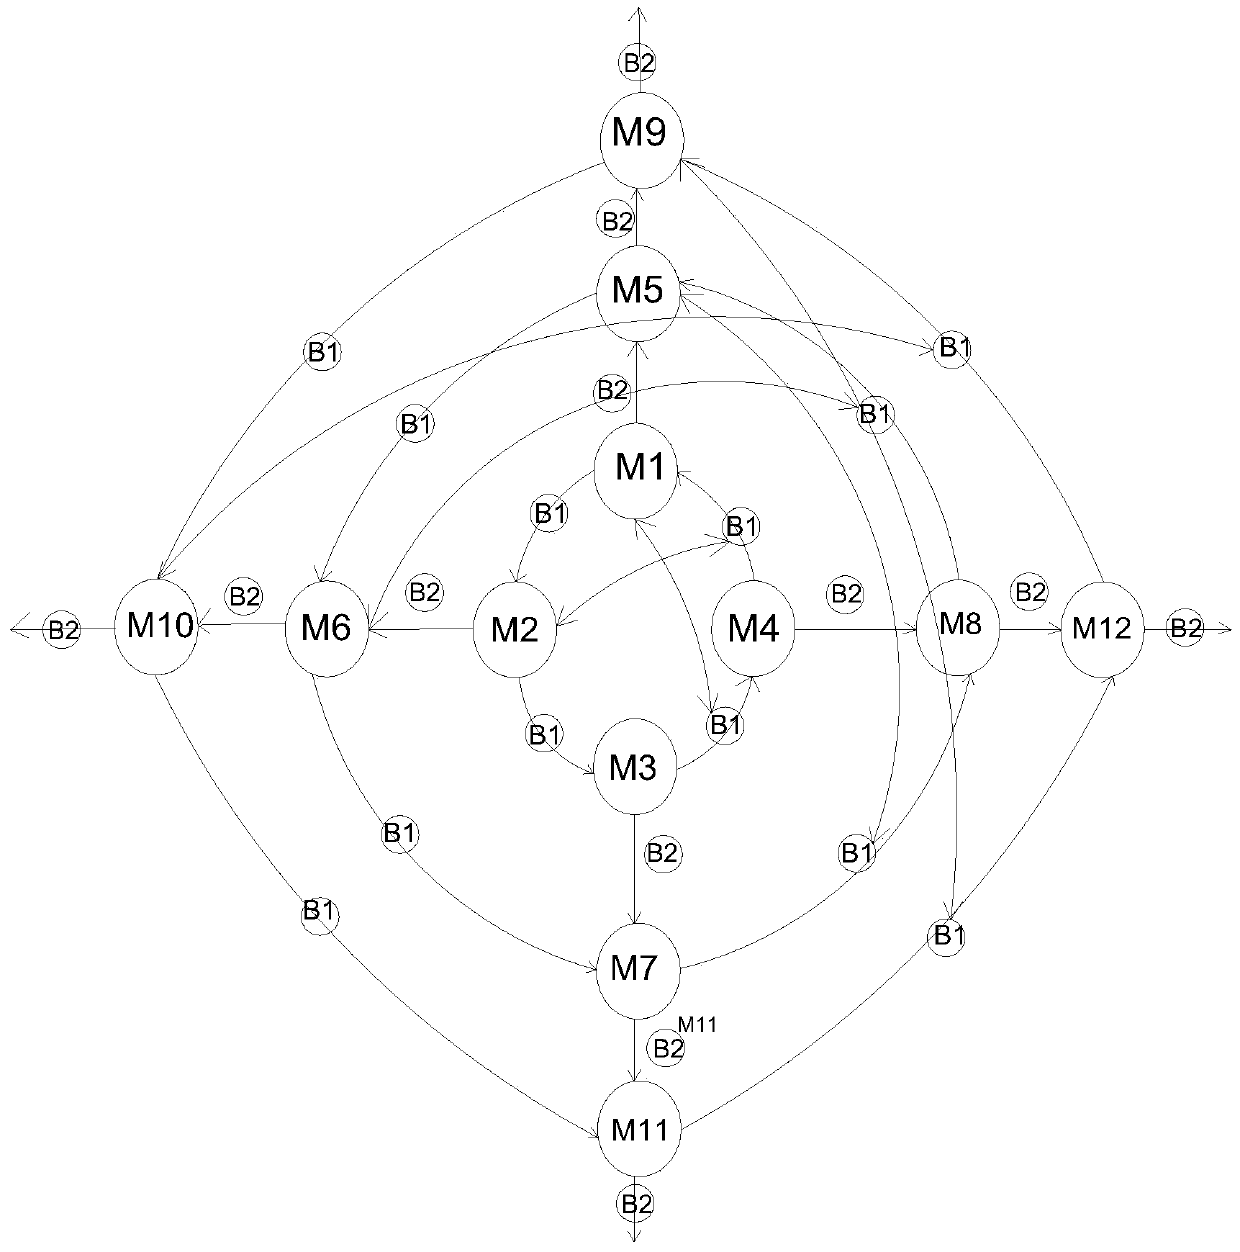 Multi-mesh-ring topology control method based on Bluetooth network and storage medium